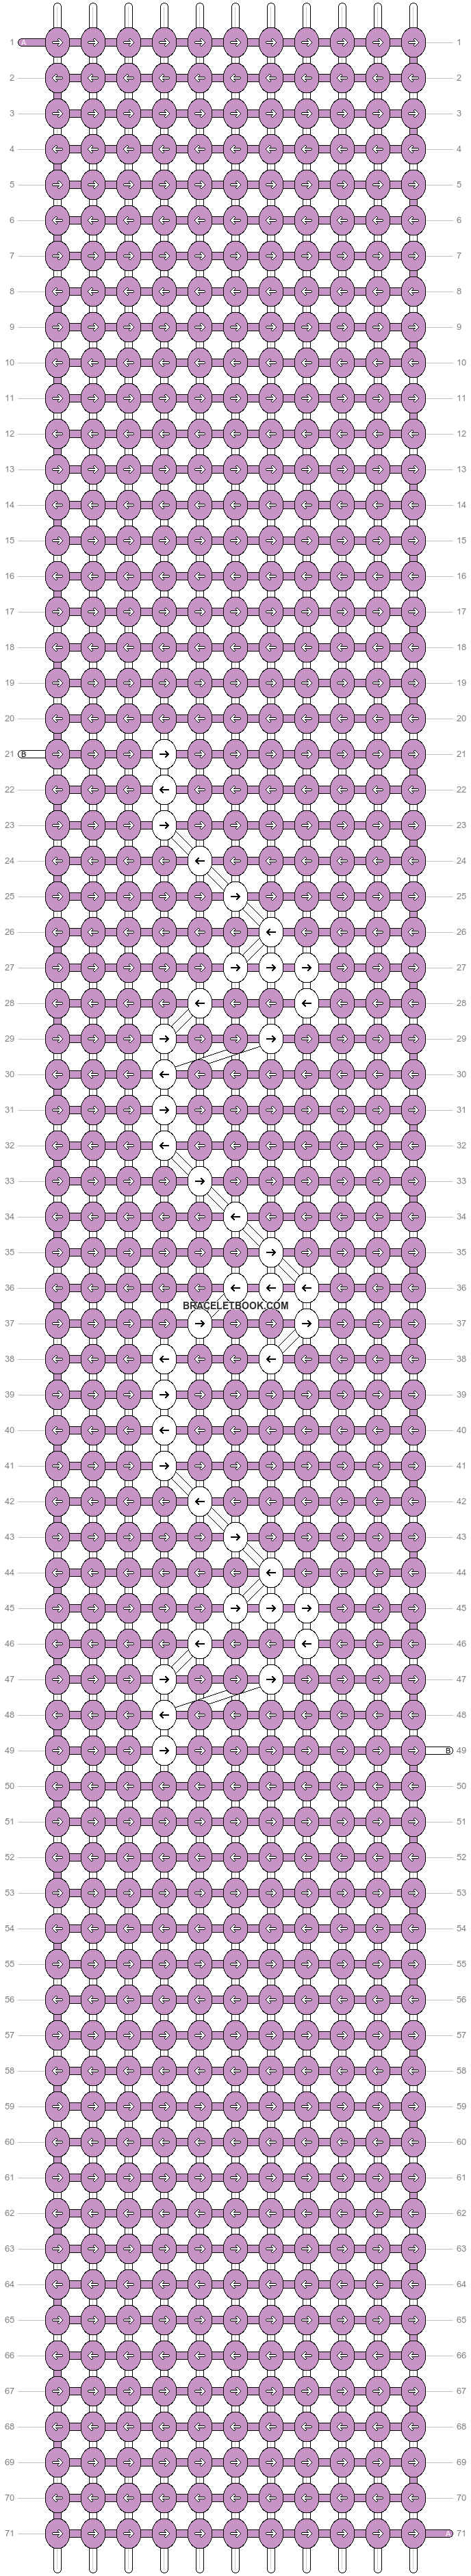 Alpha pattern #38672 variation #46978 pattern